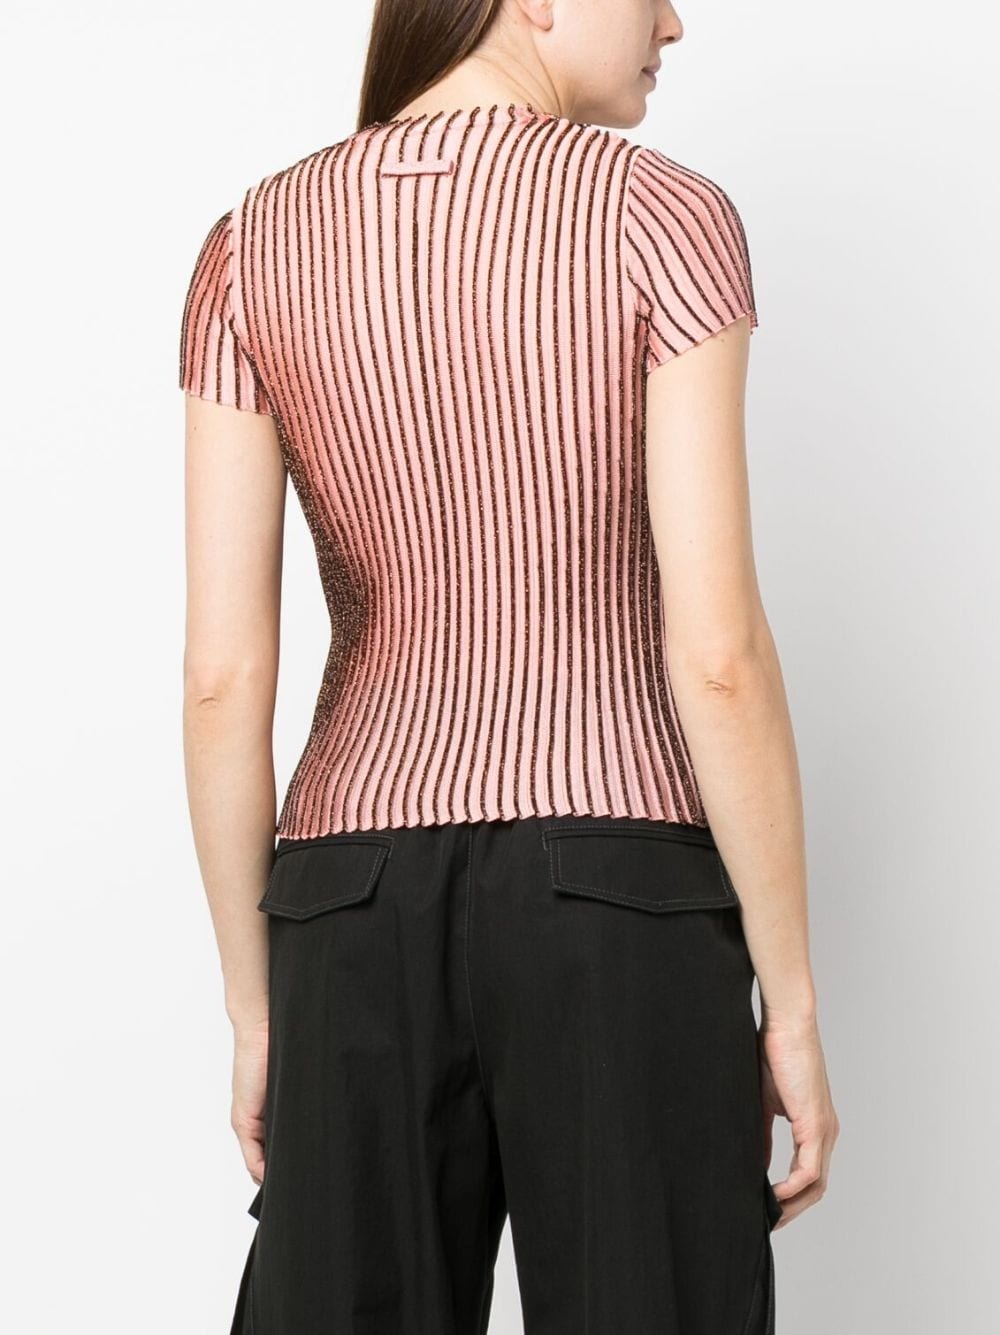 Jean Paul Gaultier striped short-sleeve top | REVERSIBLE